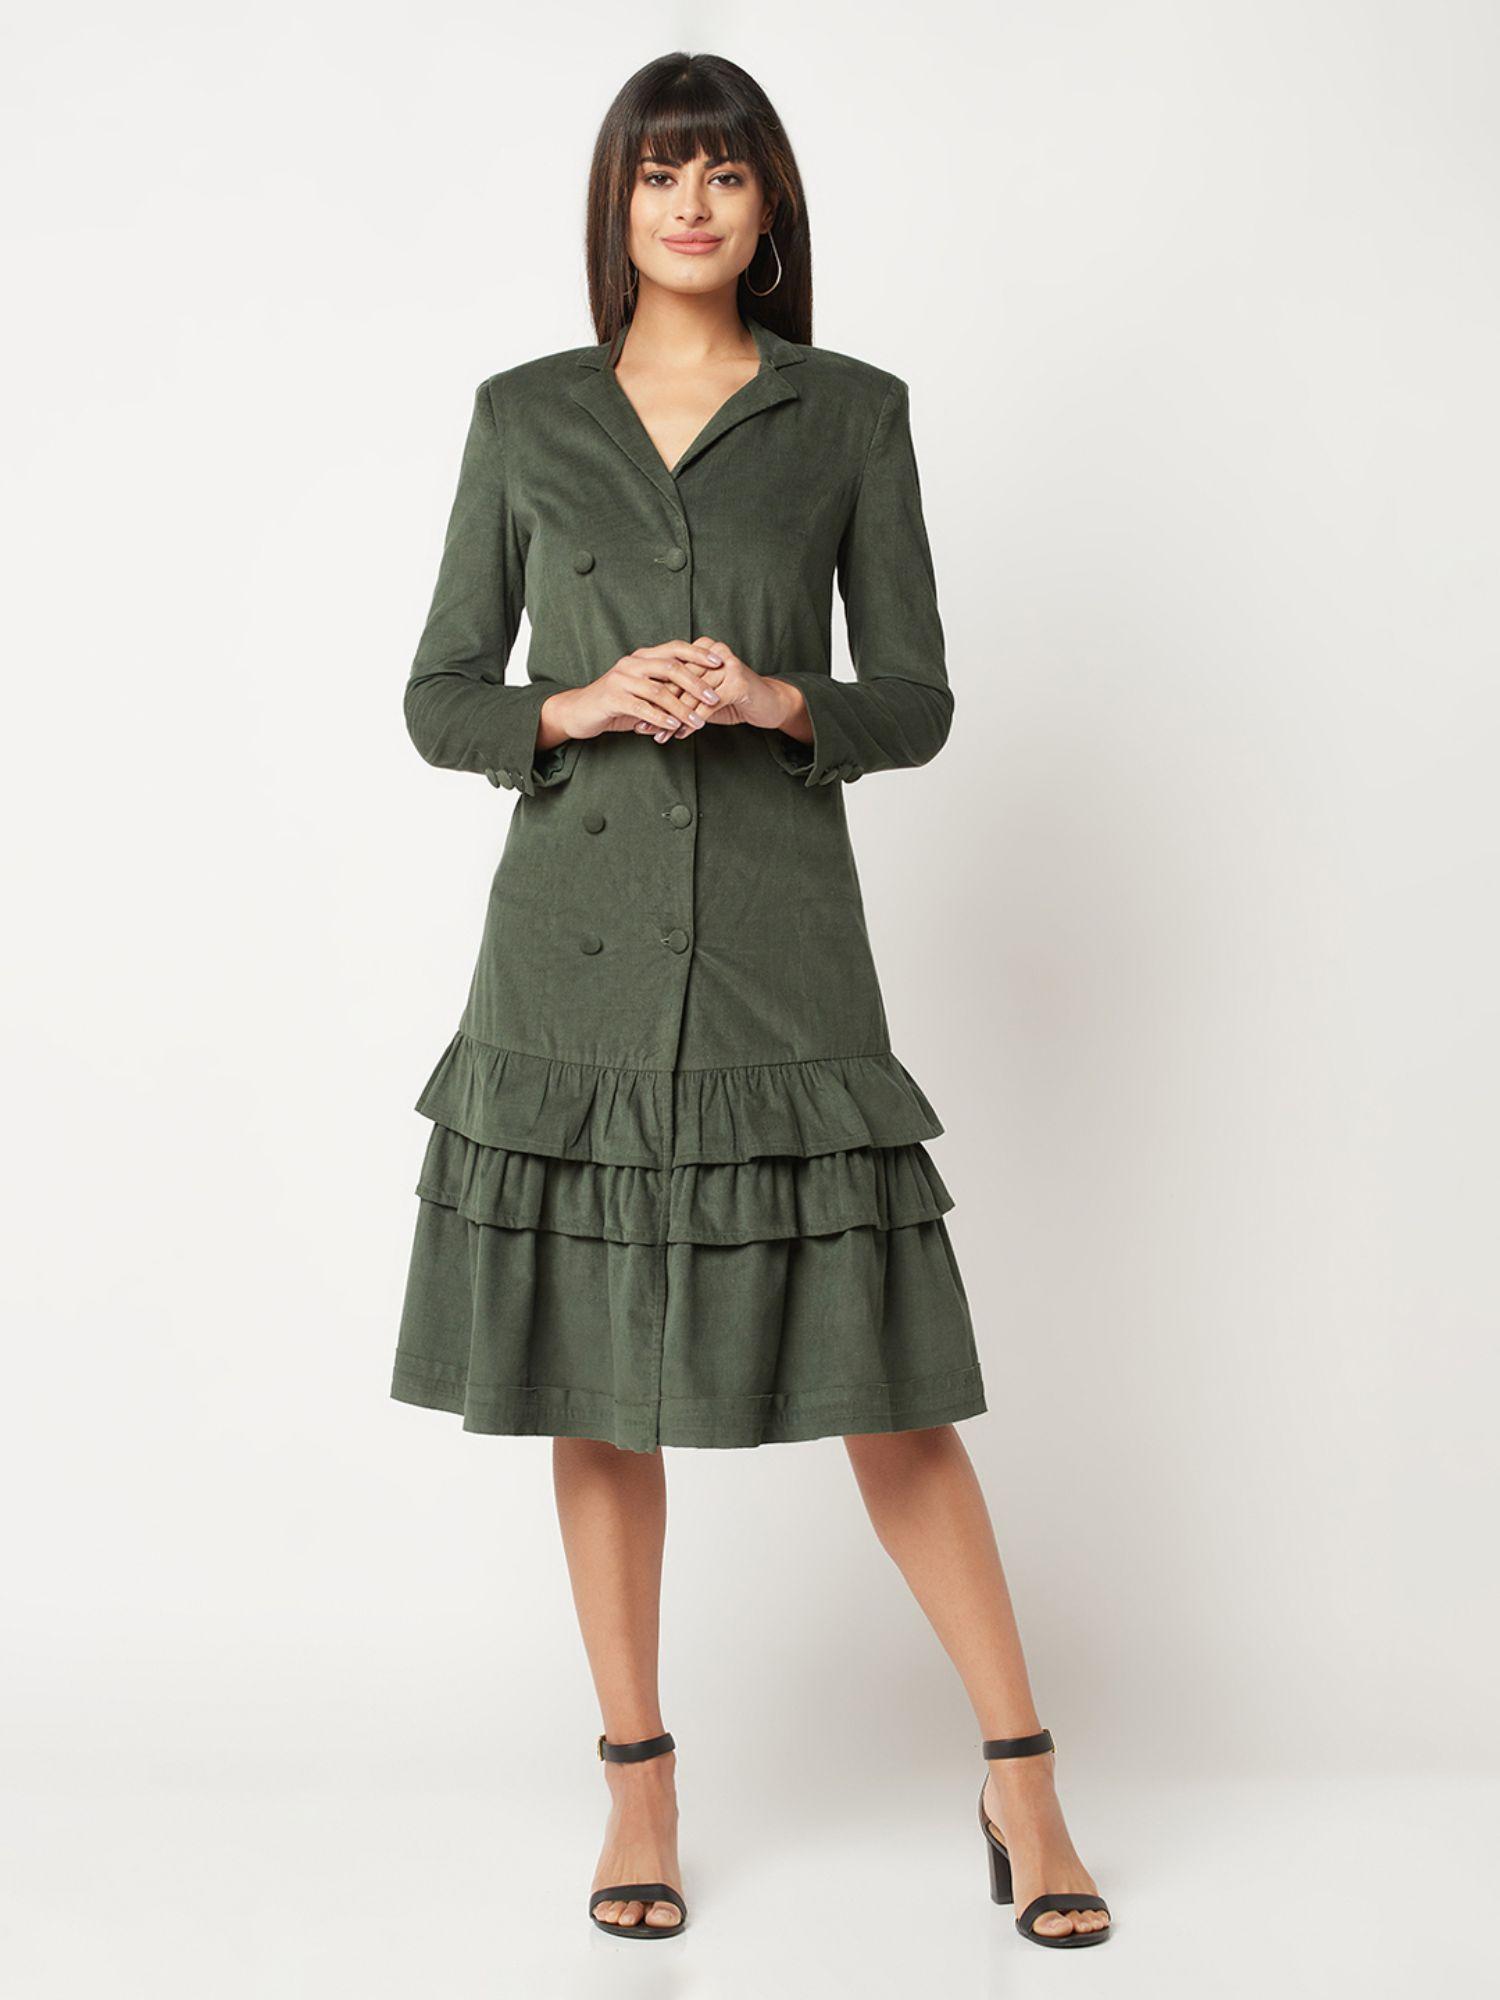 green corduroy dress